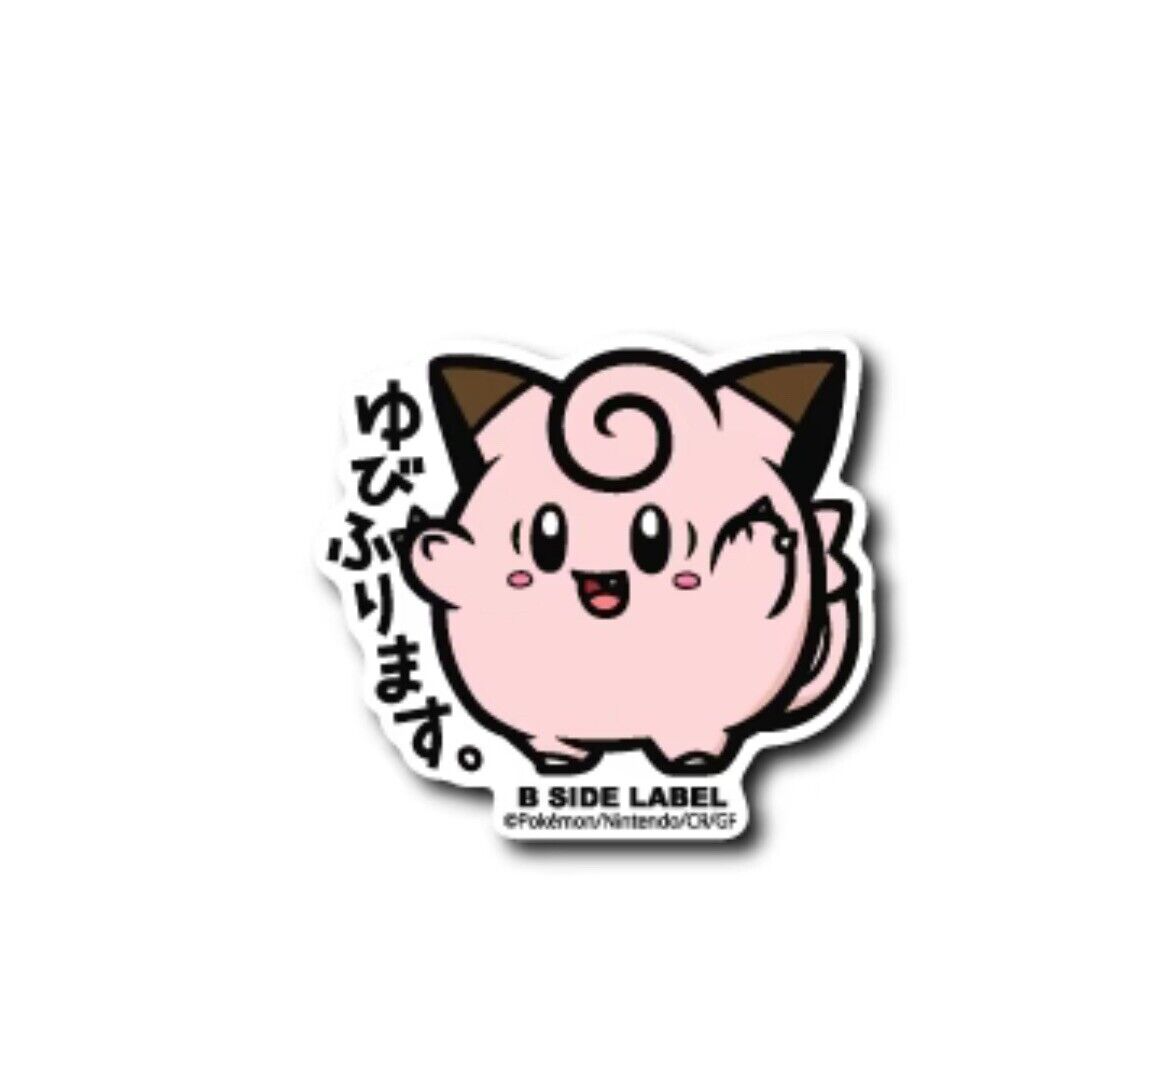 Pokemon | Clefairy 0035  Sticker B SIDE LABEL Pokemon Center Japan